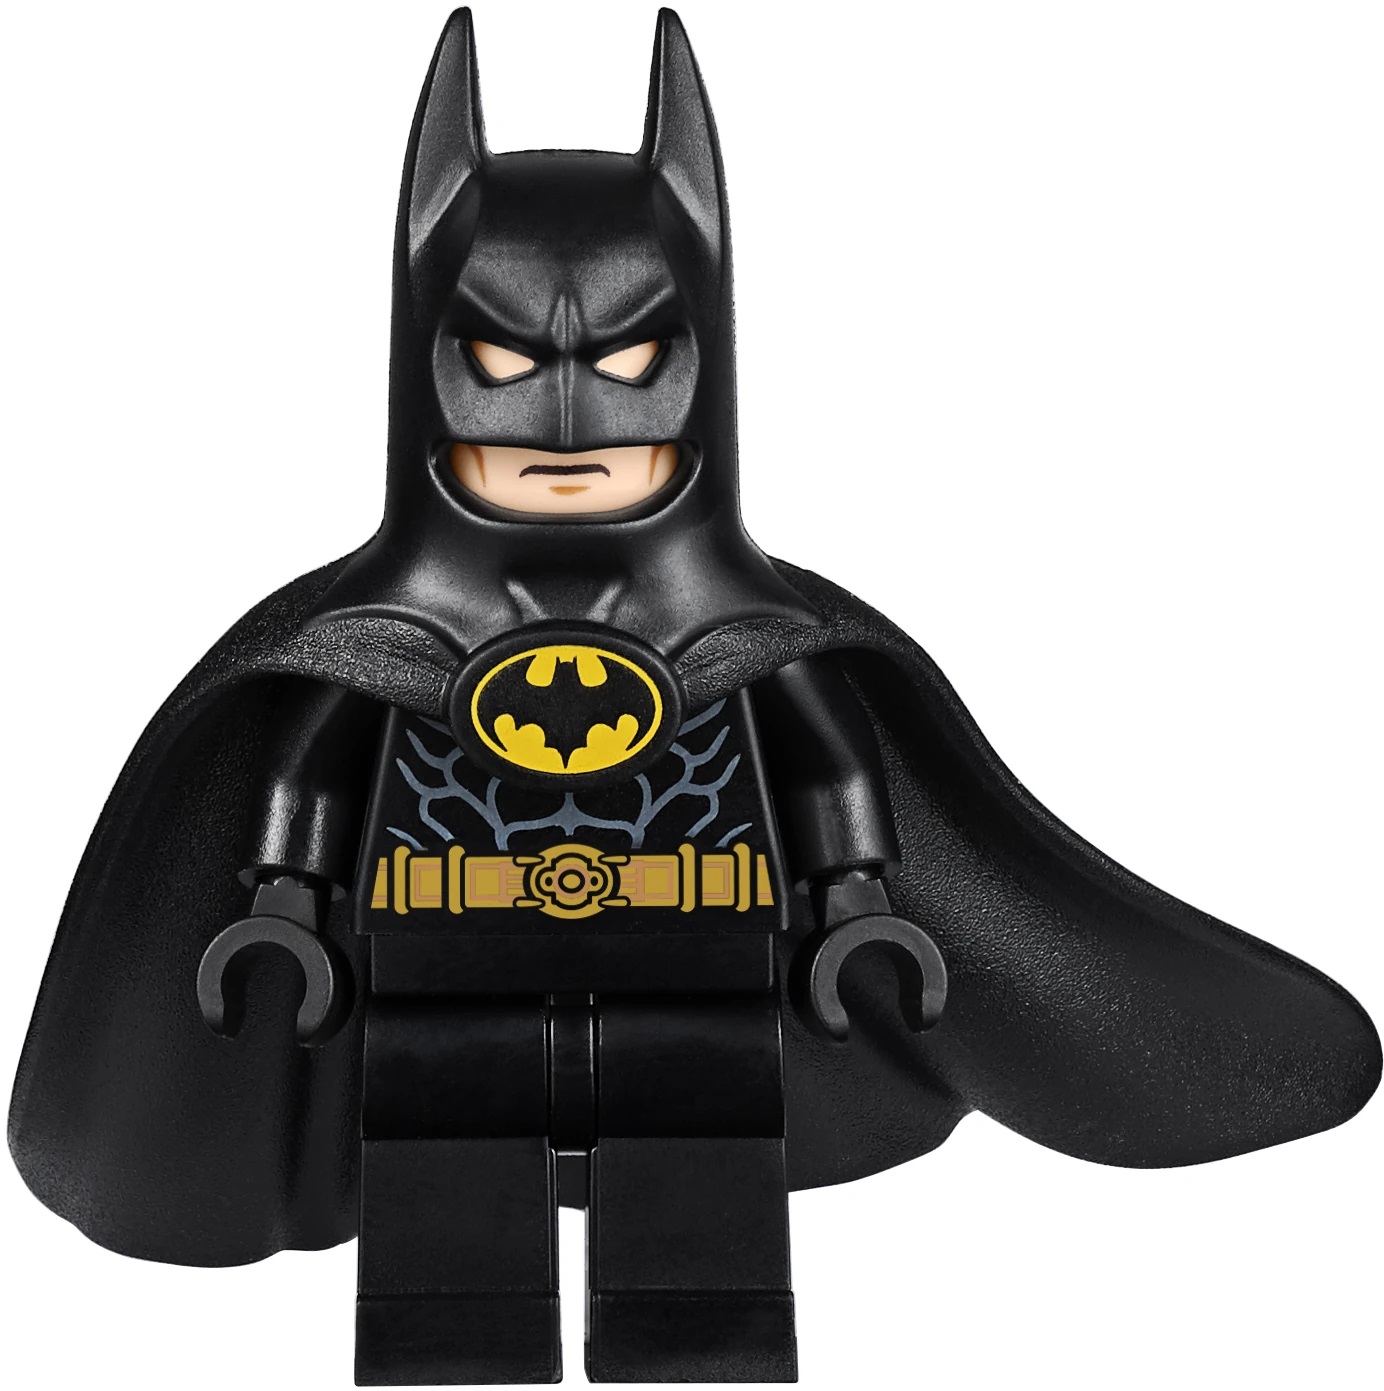 large lego batman figure